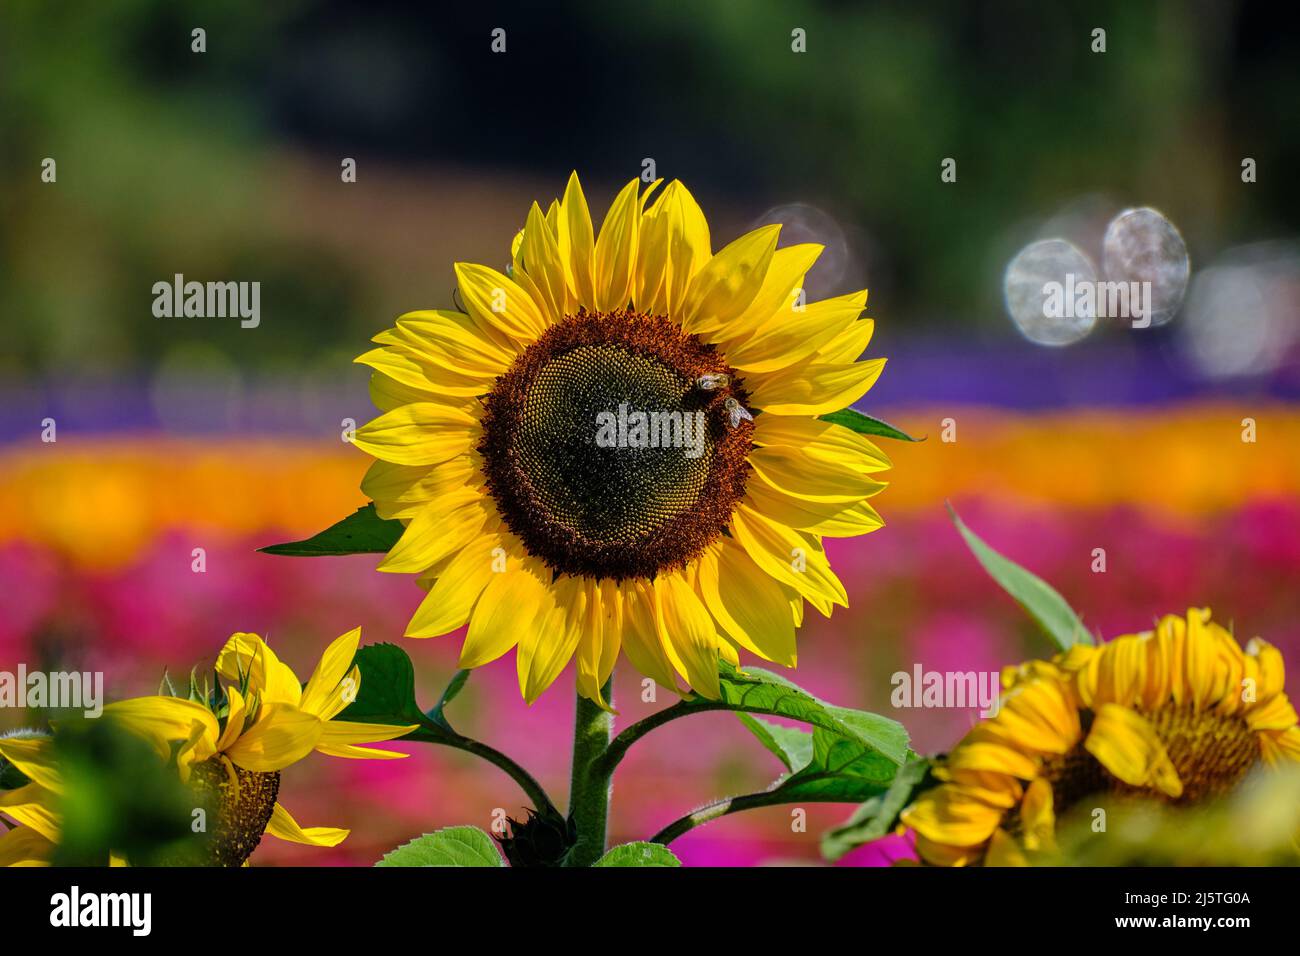 Sunflower Central Foto de stock